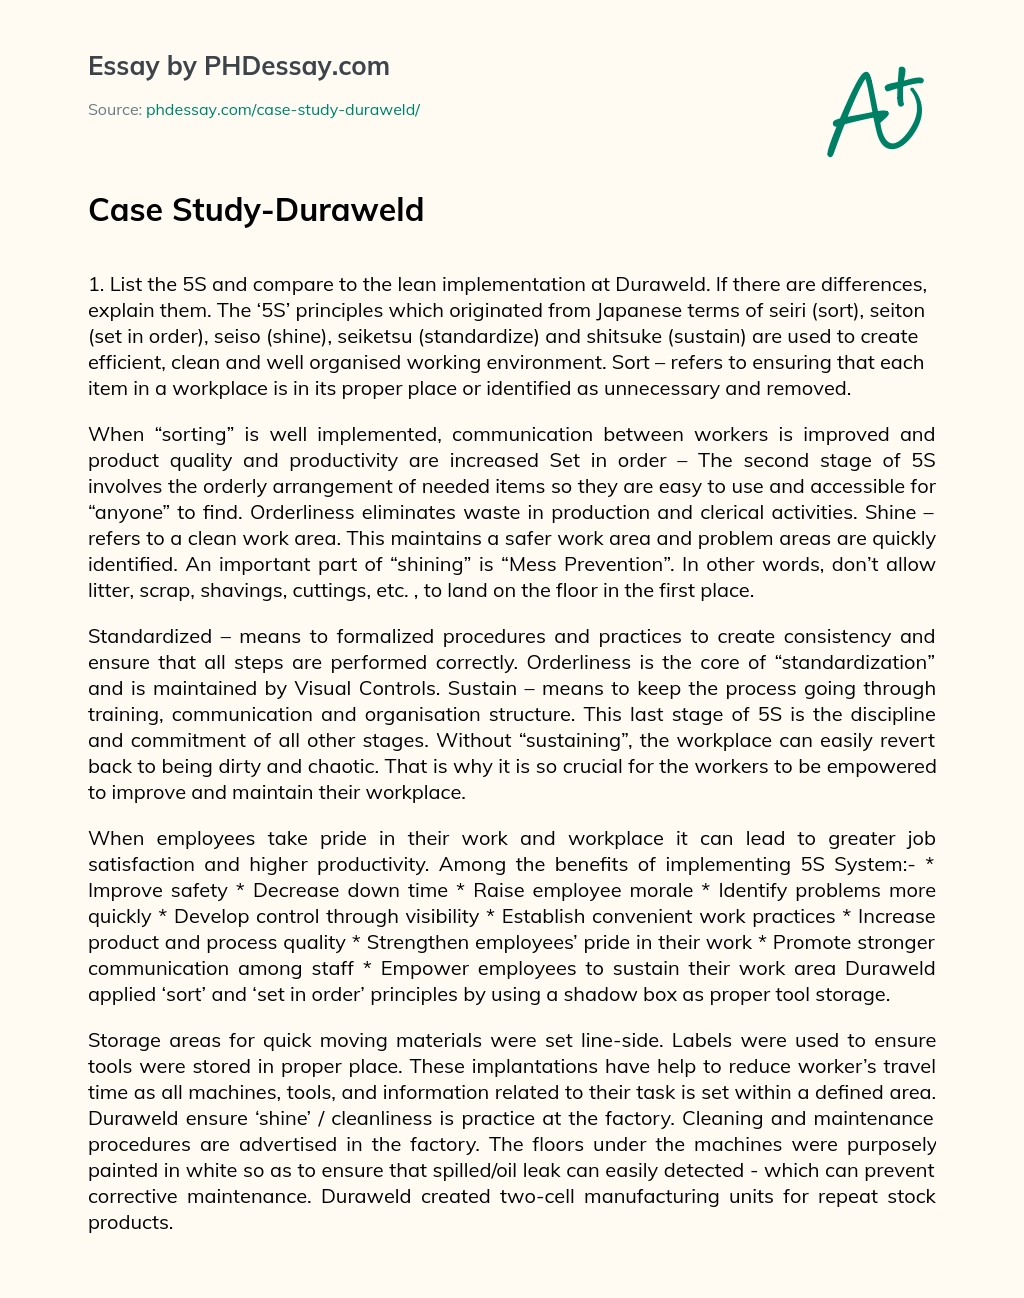 Case Study-Duraweld essay